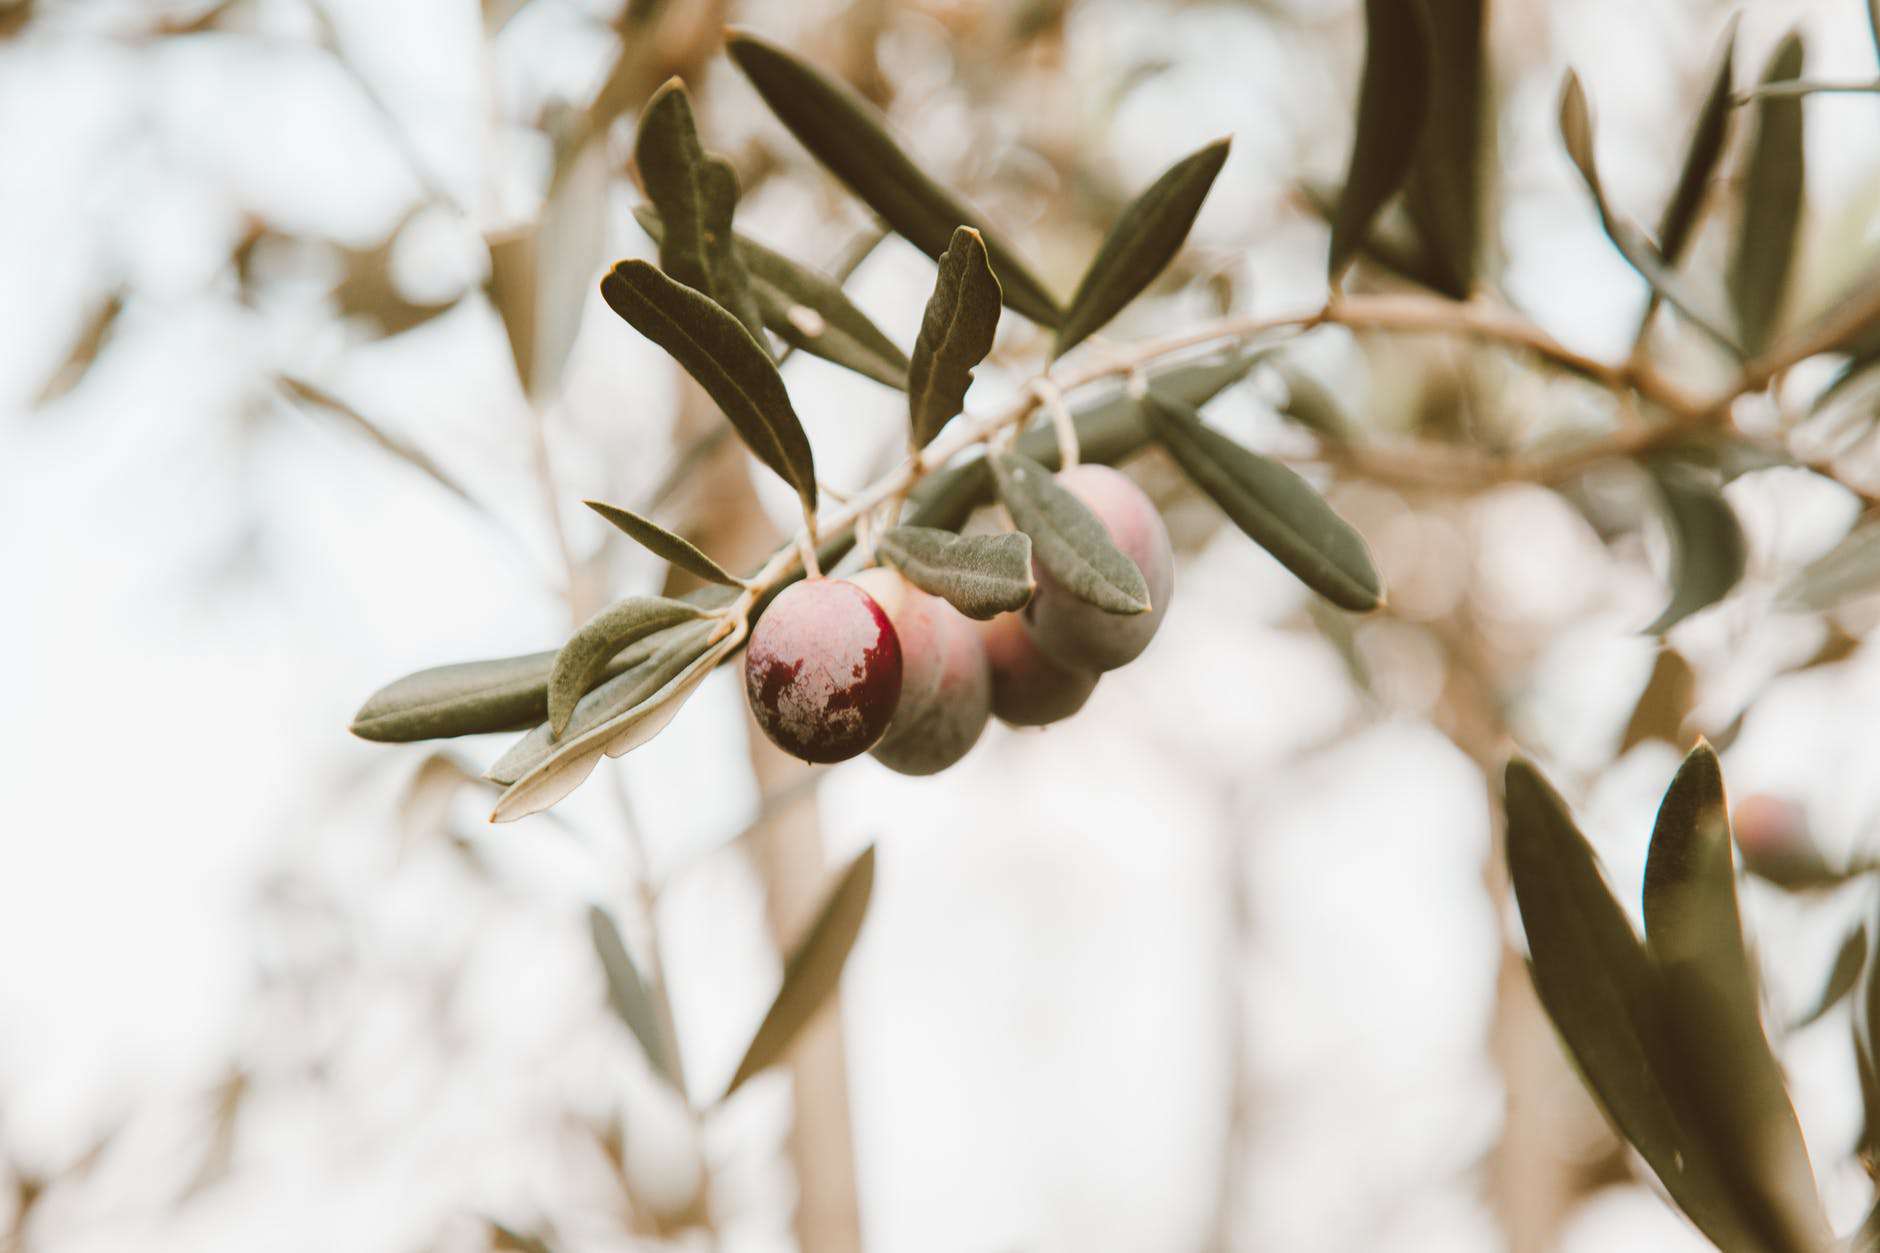 ripening olives on branch